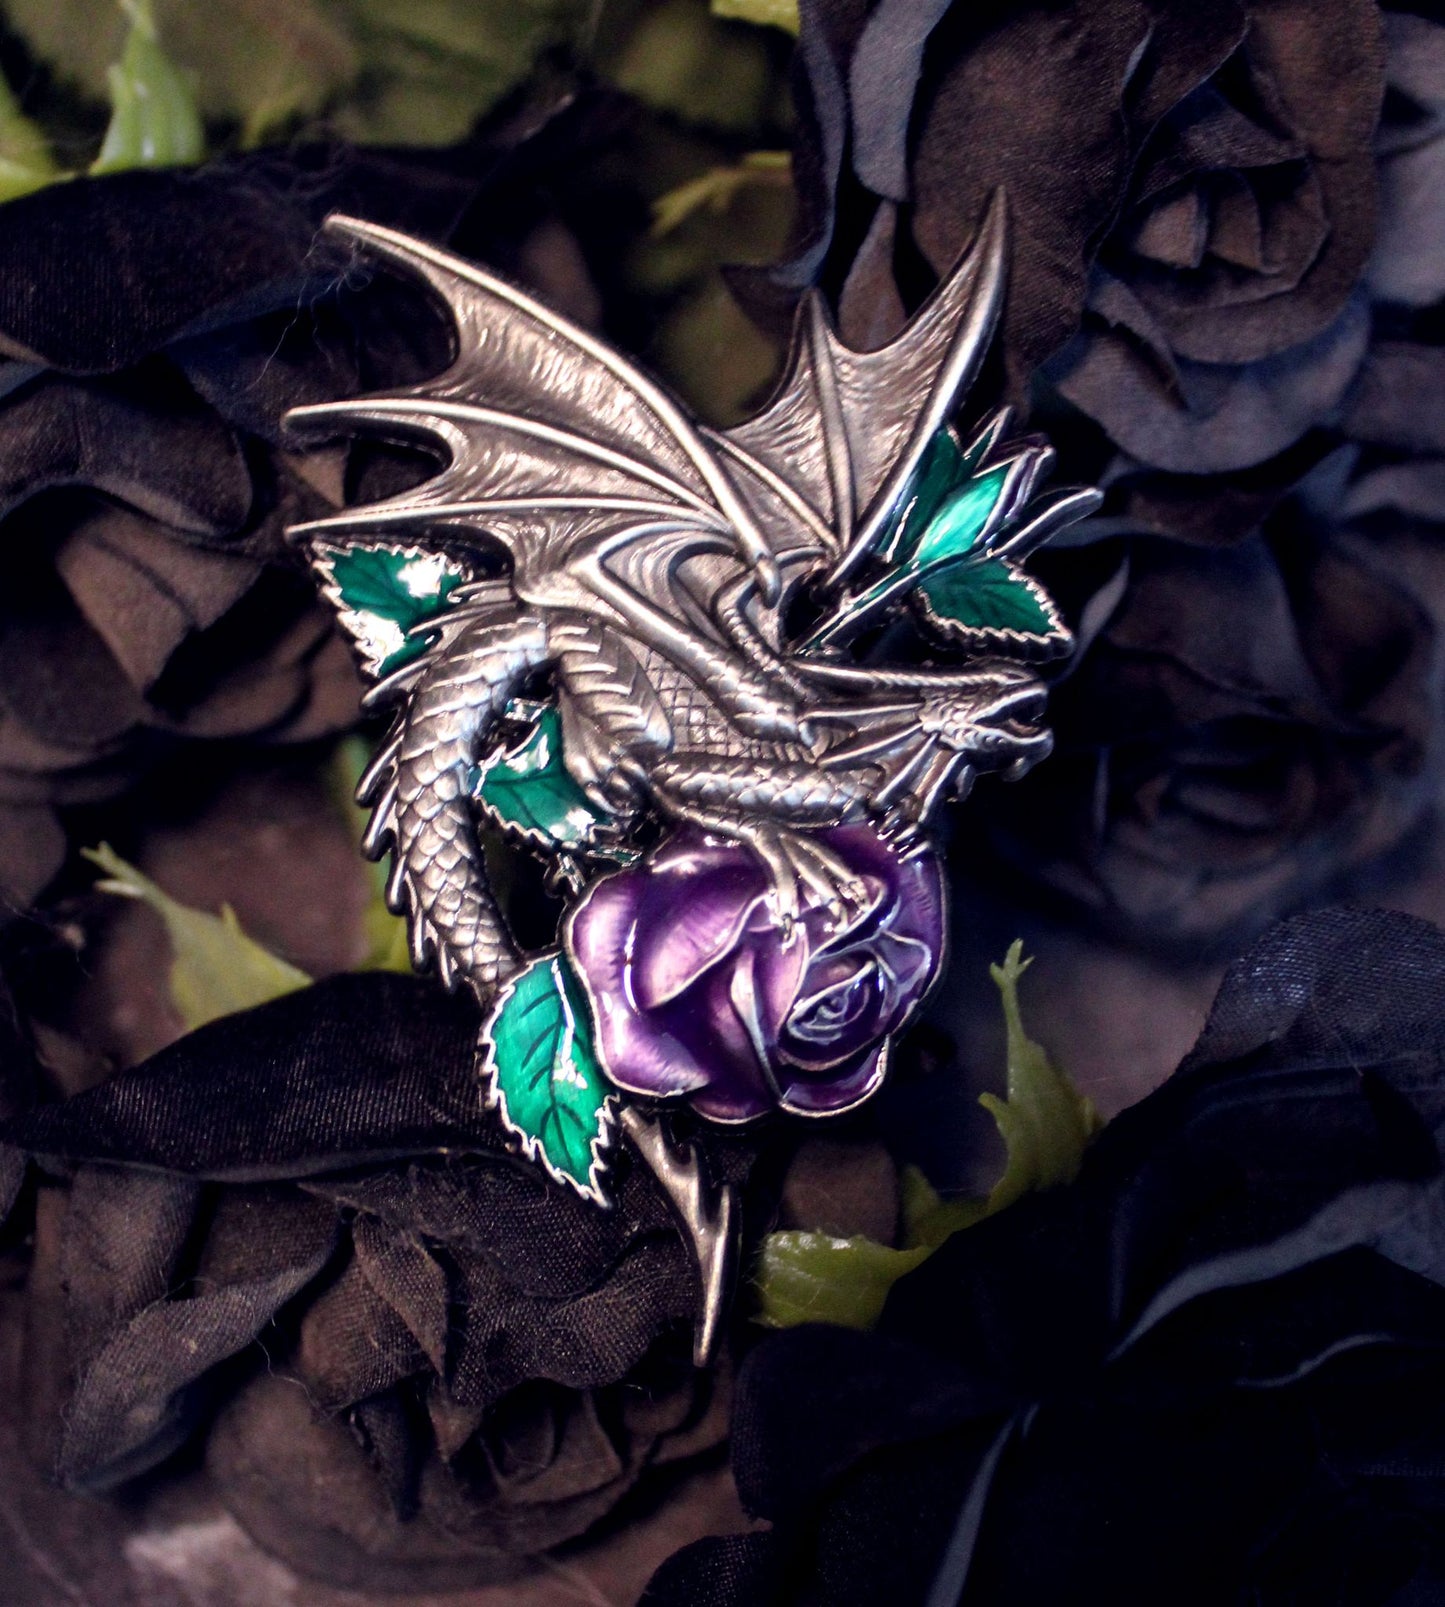 Dragon Beauty van Anne Stokes, pin-badge